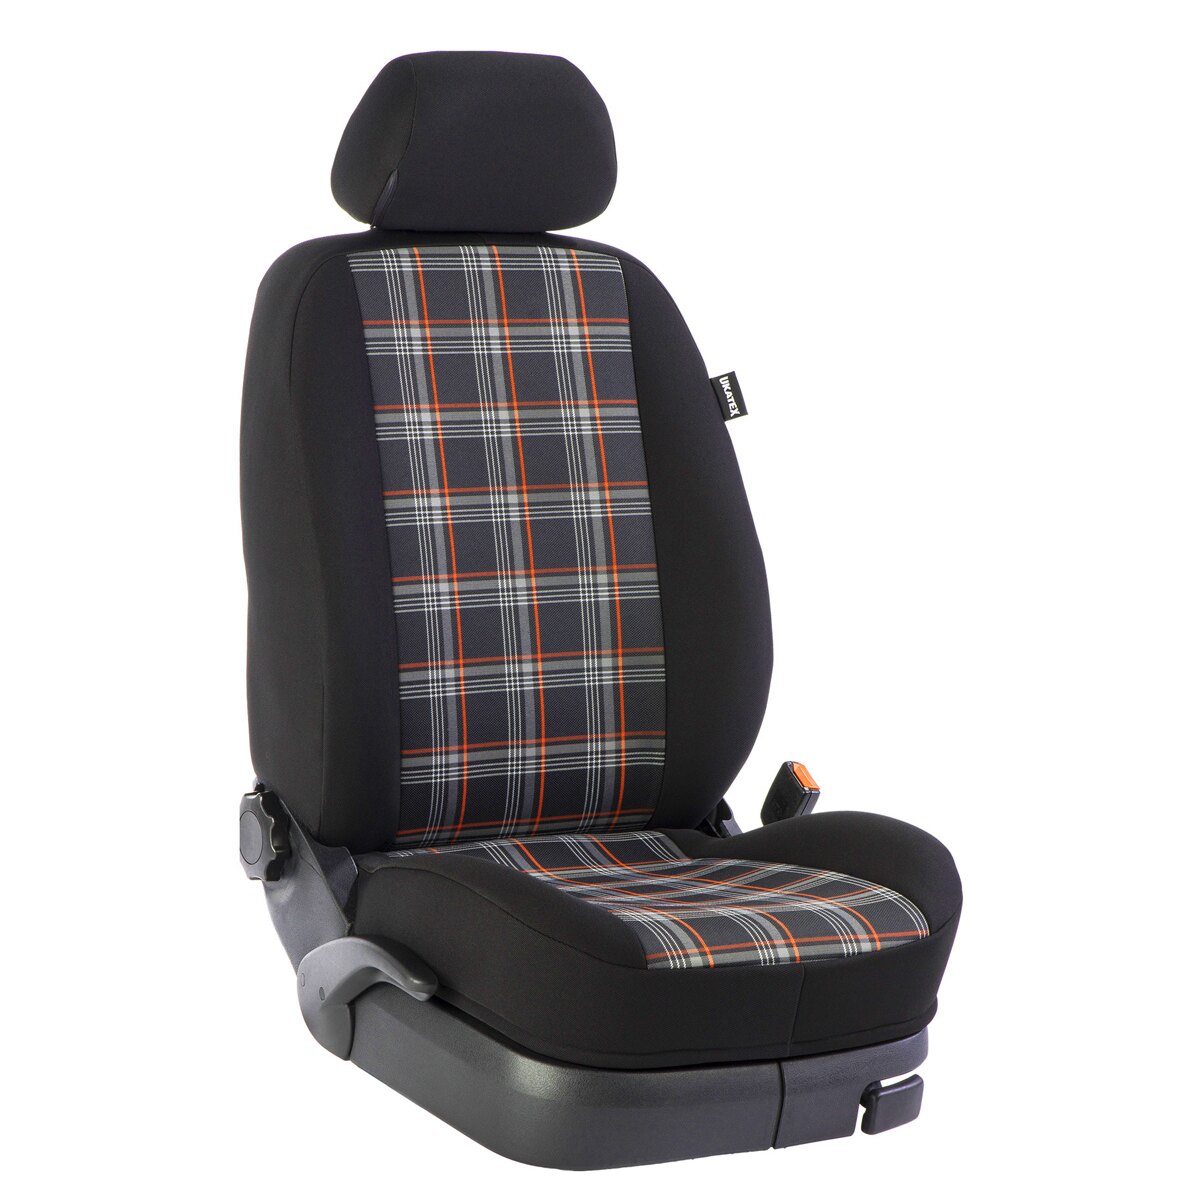 DTGPRO Auto Sitzbezug Set passend für Passat CC B6 B5 B8 VW Polo Golf 4 5 6  7 MK4 Tiguan 2018 Camry passend für Autositzbezüge / Beige